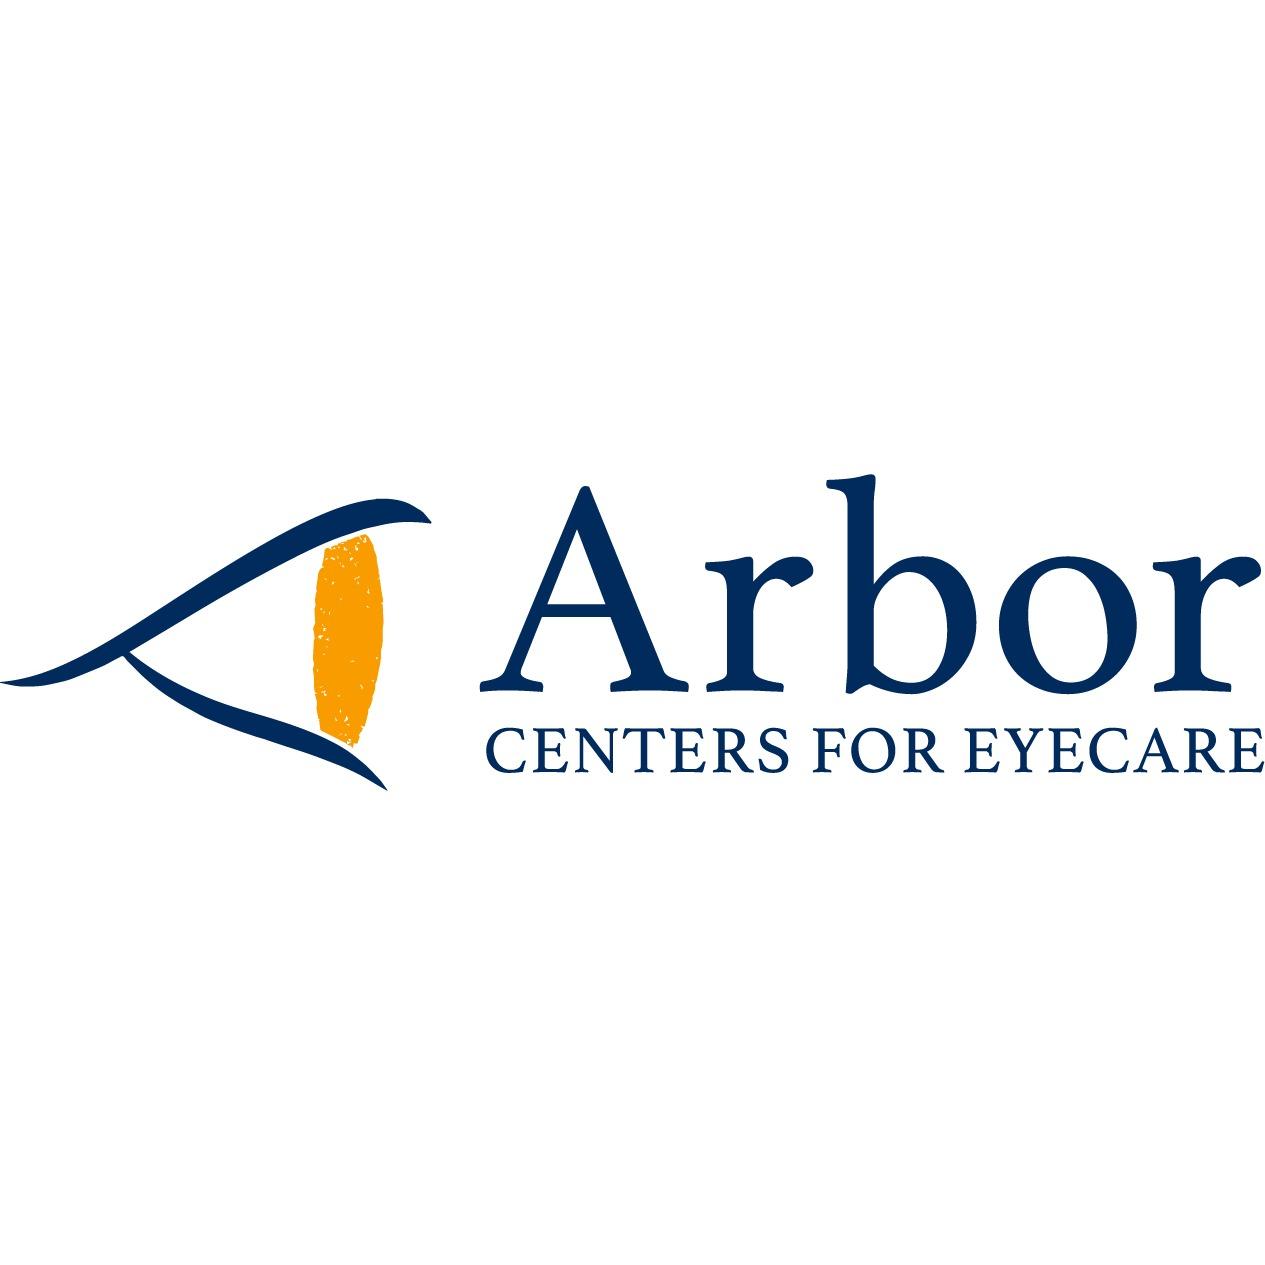 Arbor Centers for EyeCare - Homewood, IL 60430 - (708)798-6633 | ShowMeLocal.com